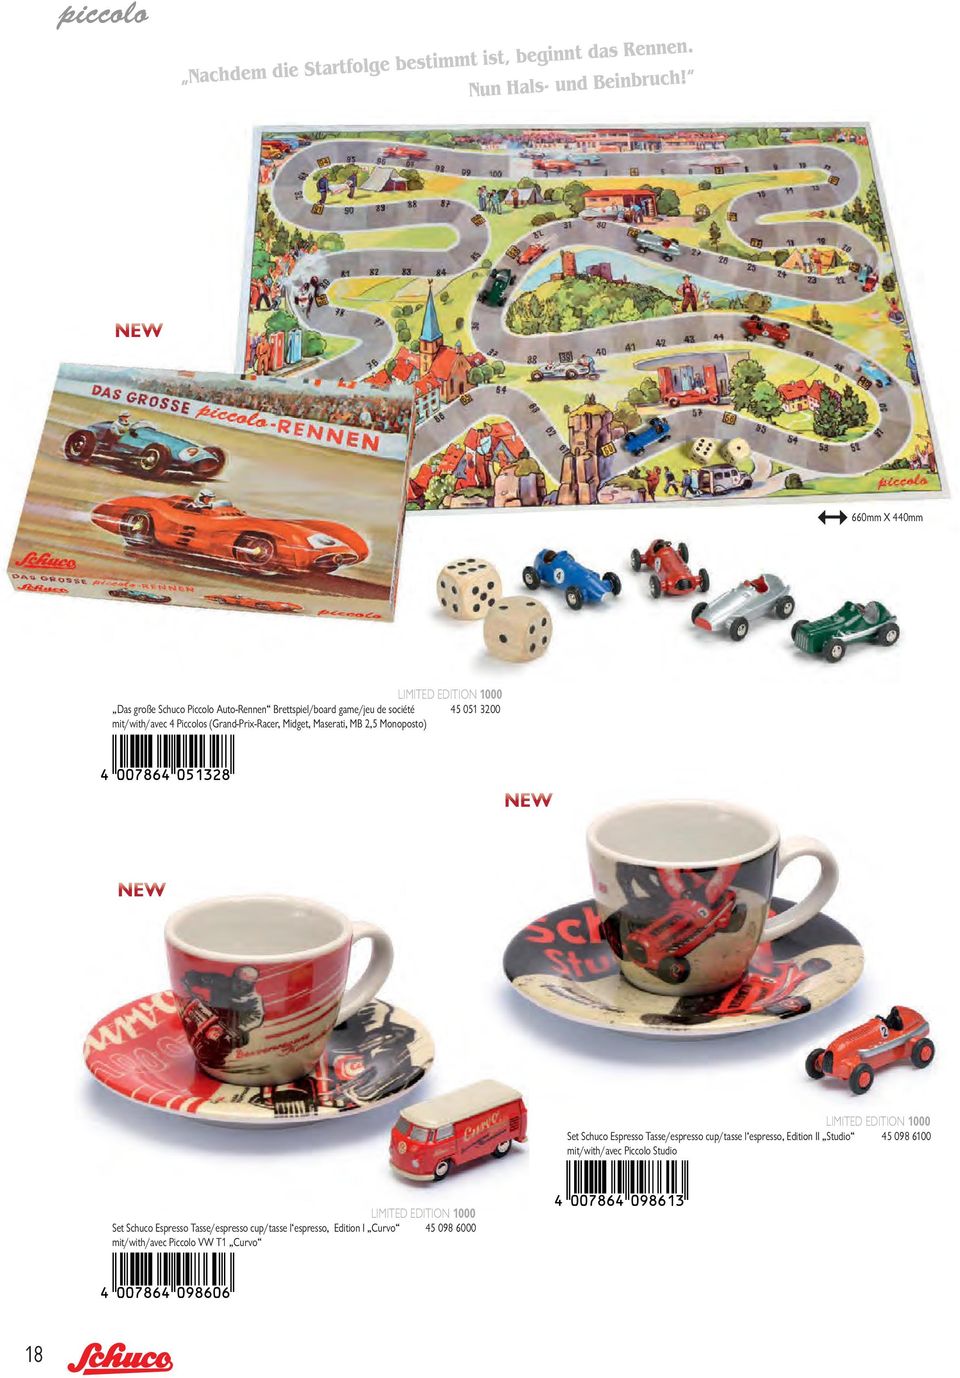 (Grand-Prix-Racer, Midget, Maserati, MB 2,5 Monoposto) Set Schuco Espresso Tasse/espresso cup/tasse l espresso, Edition II